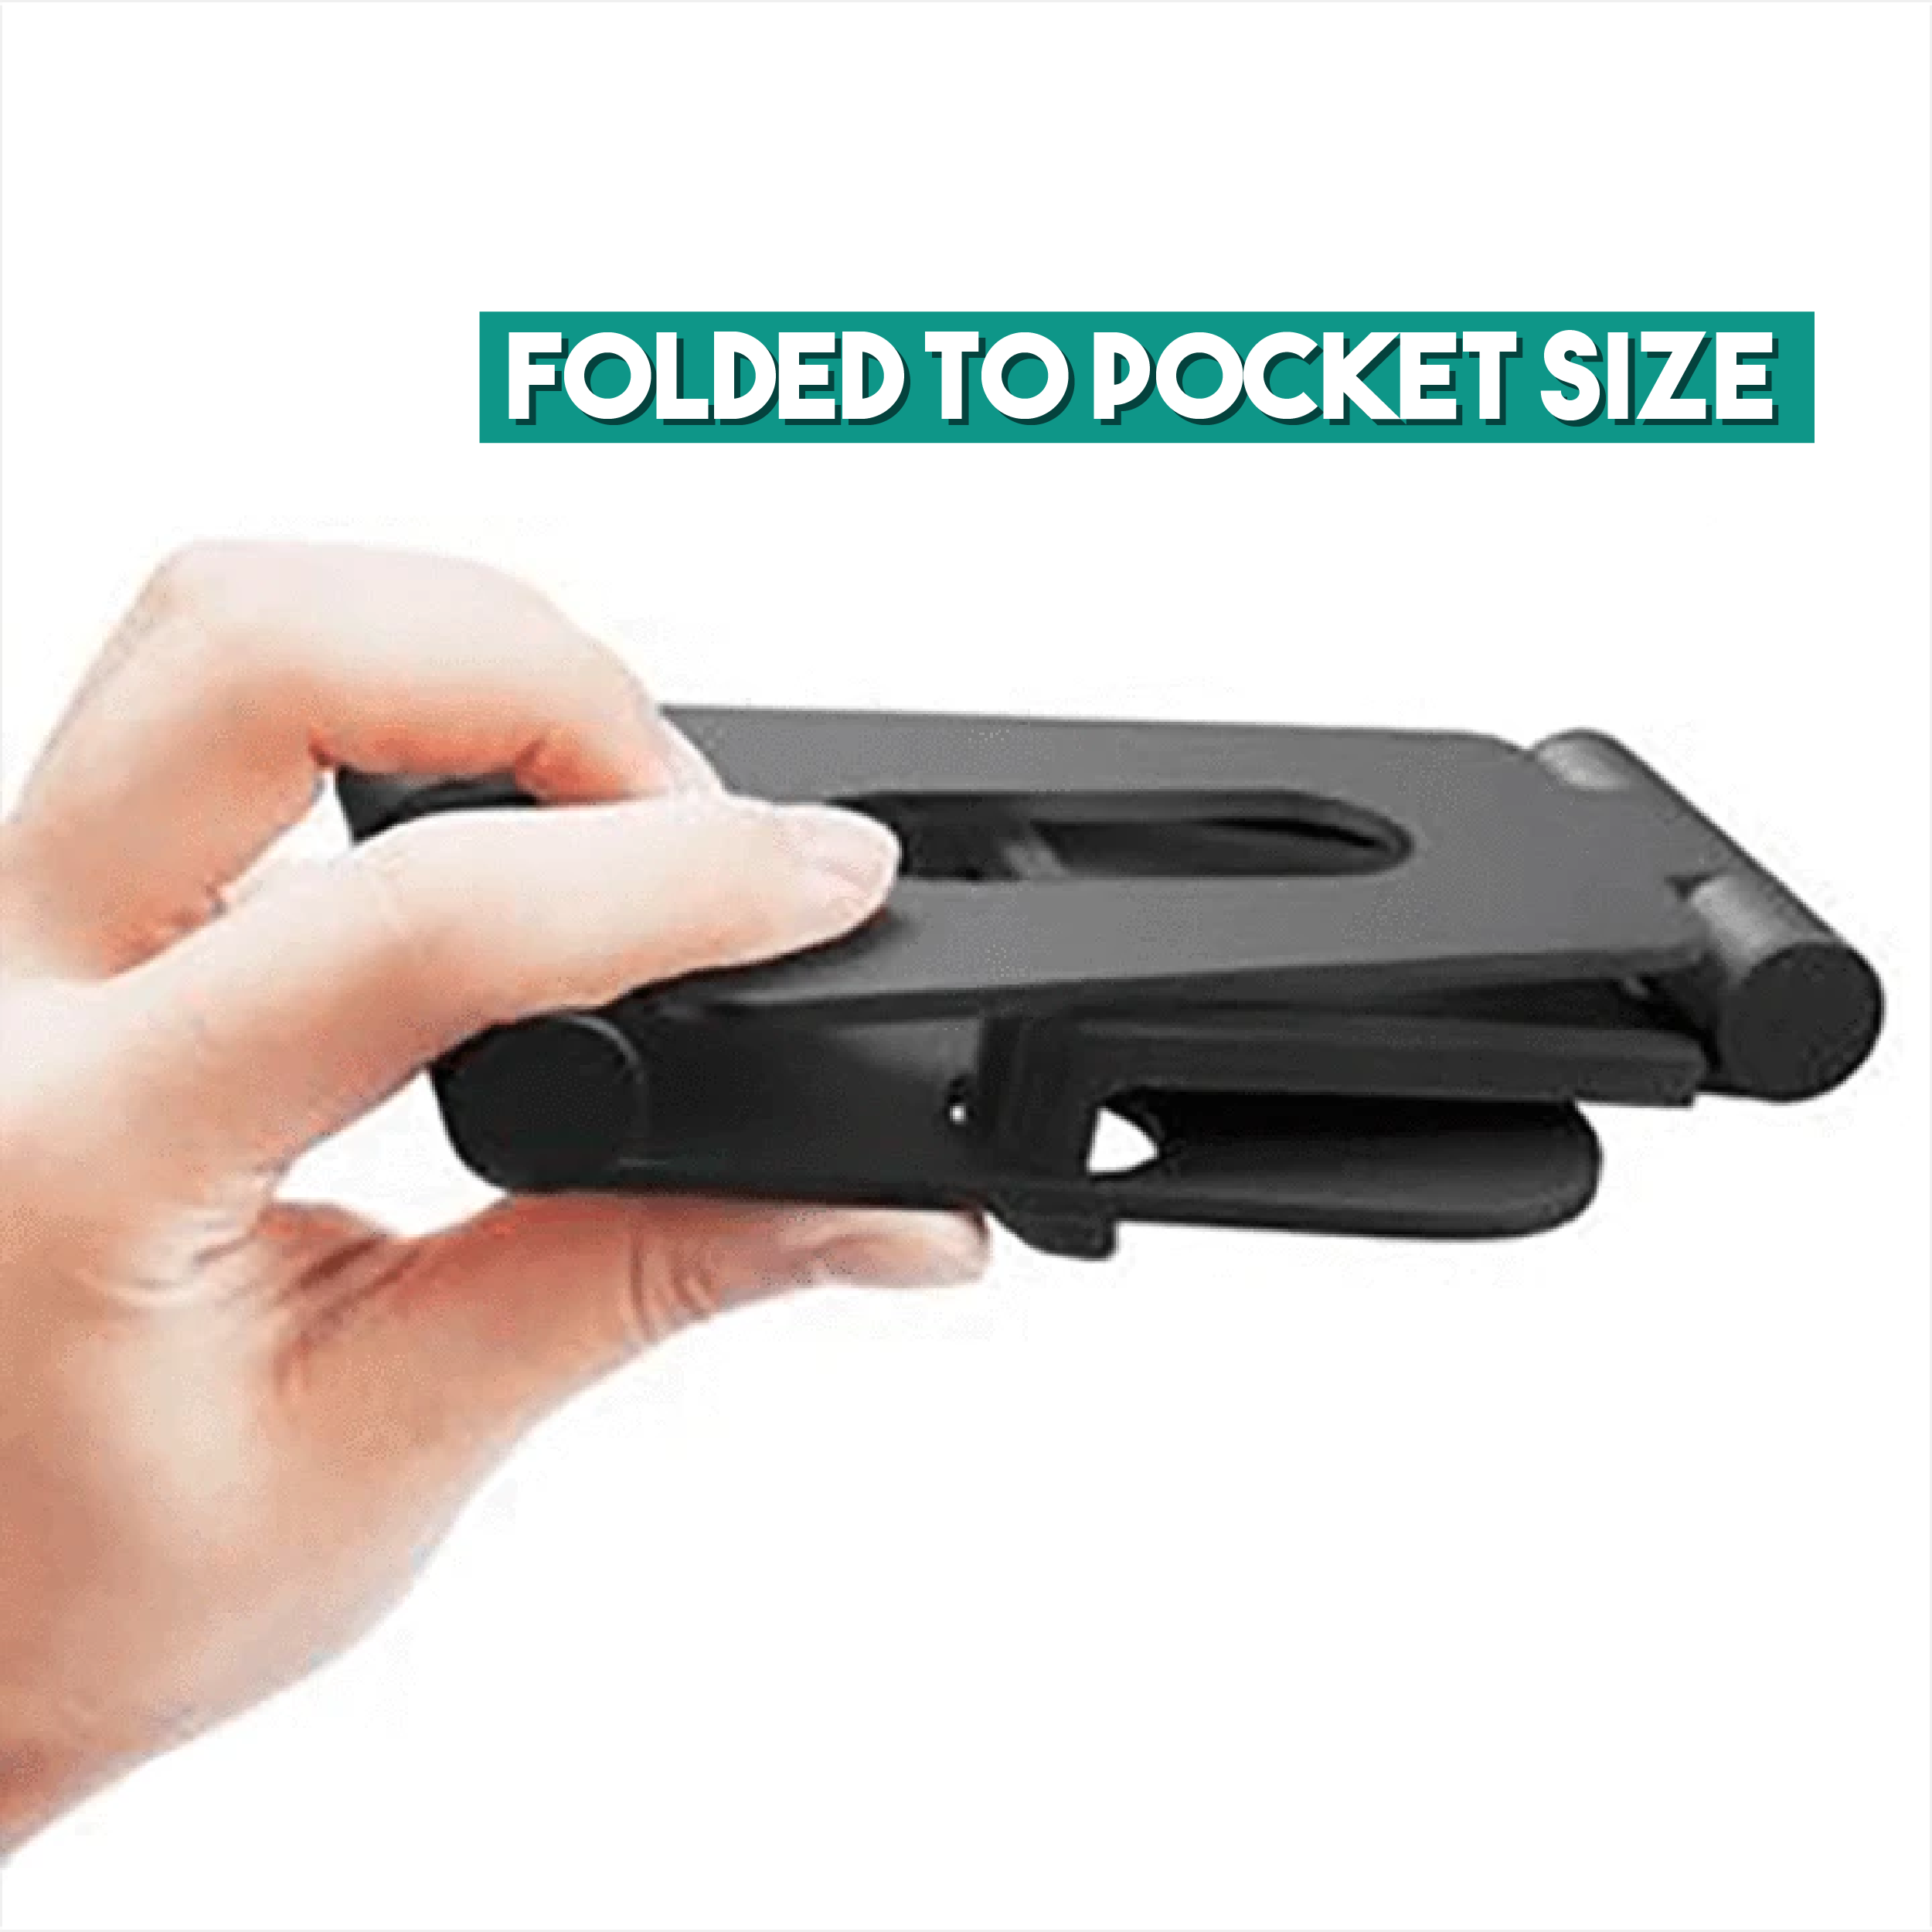 Foldable Swivel Phone Stand